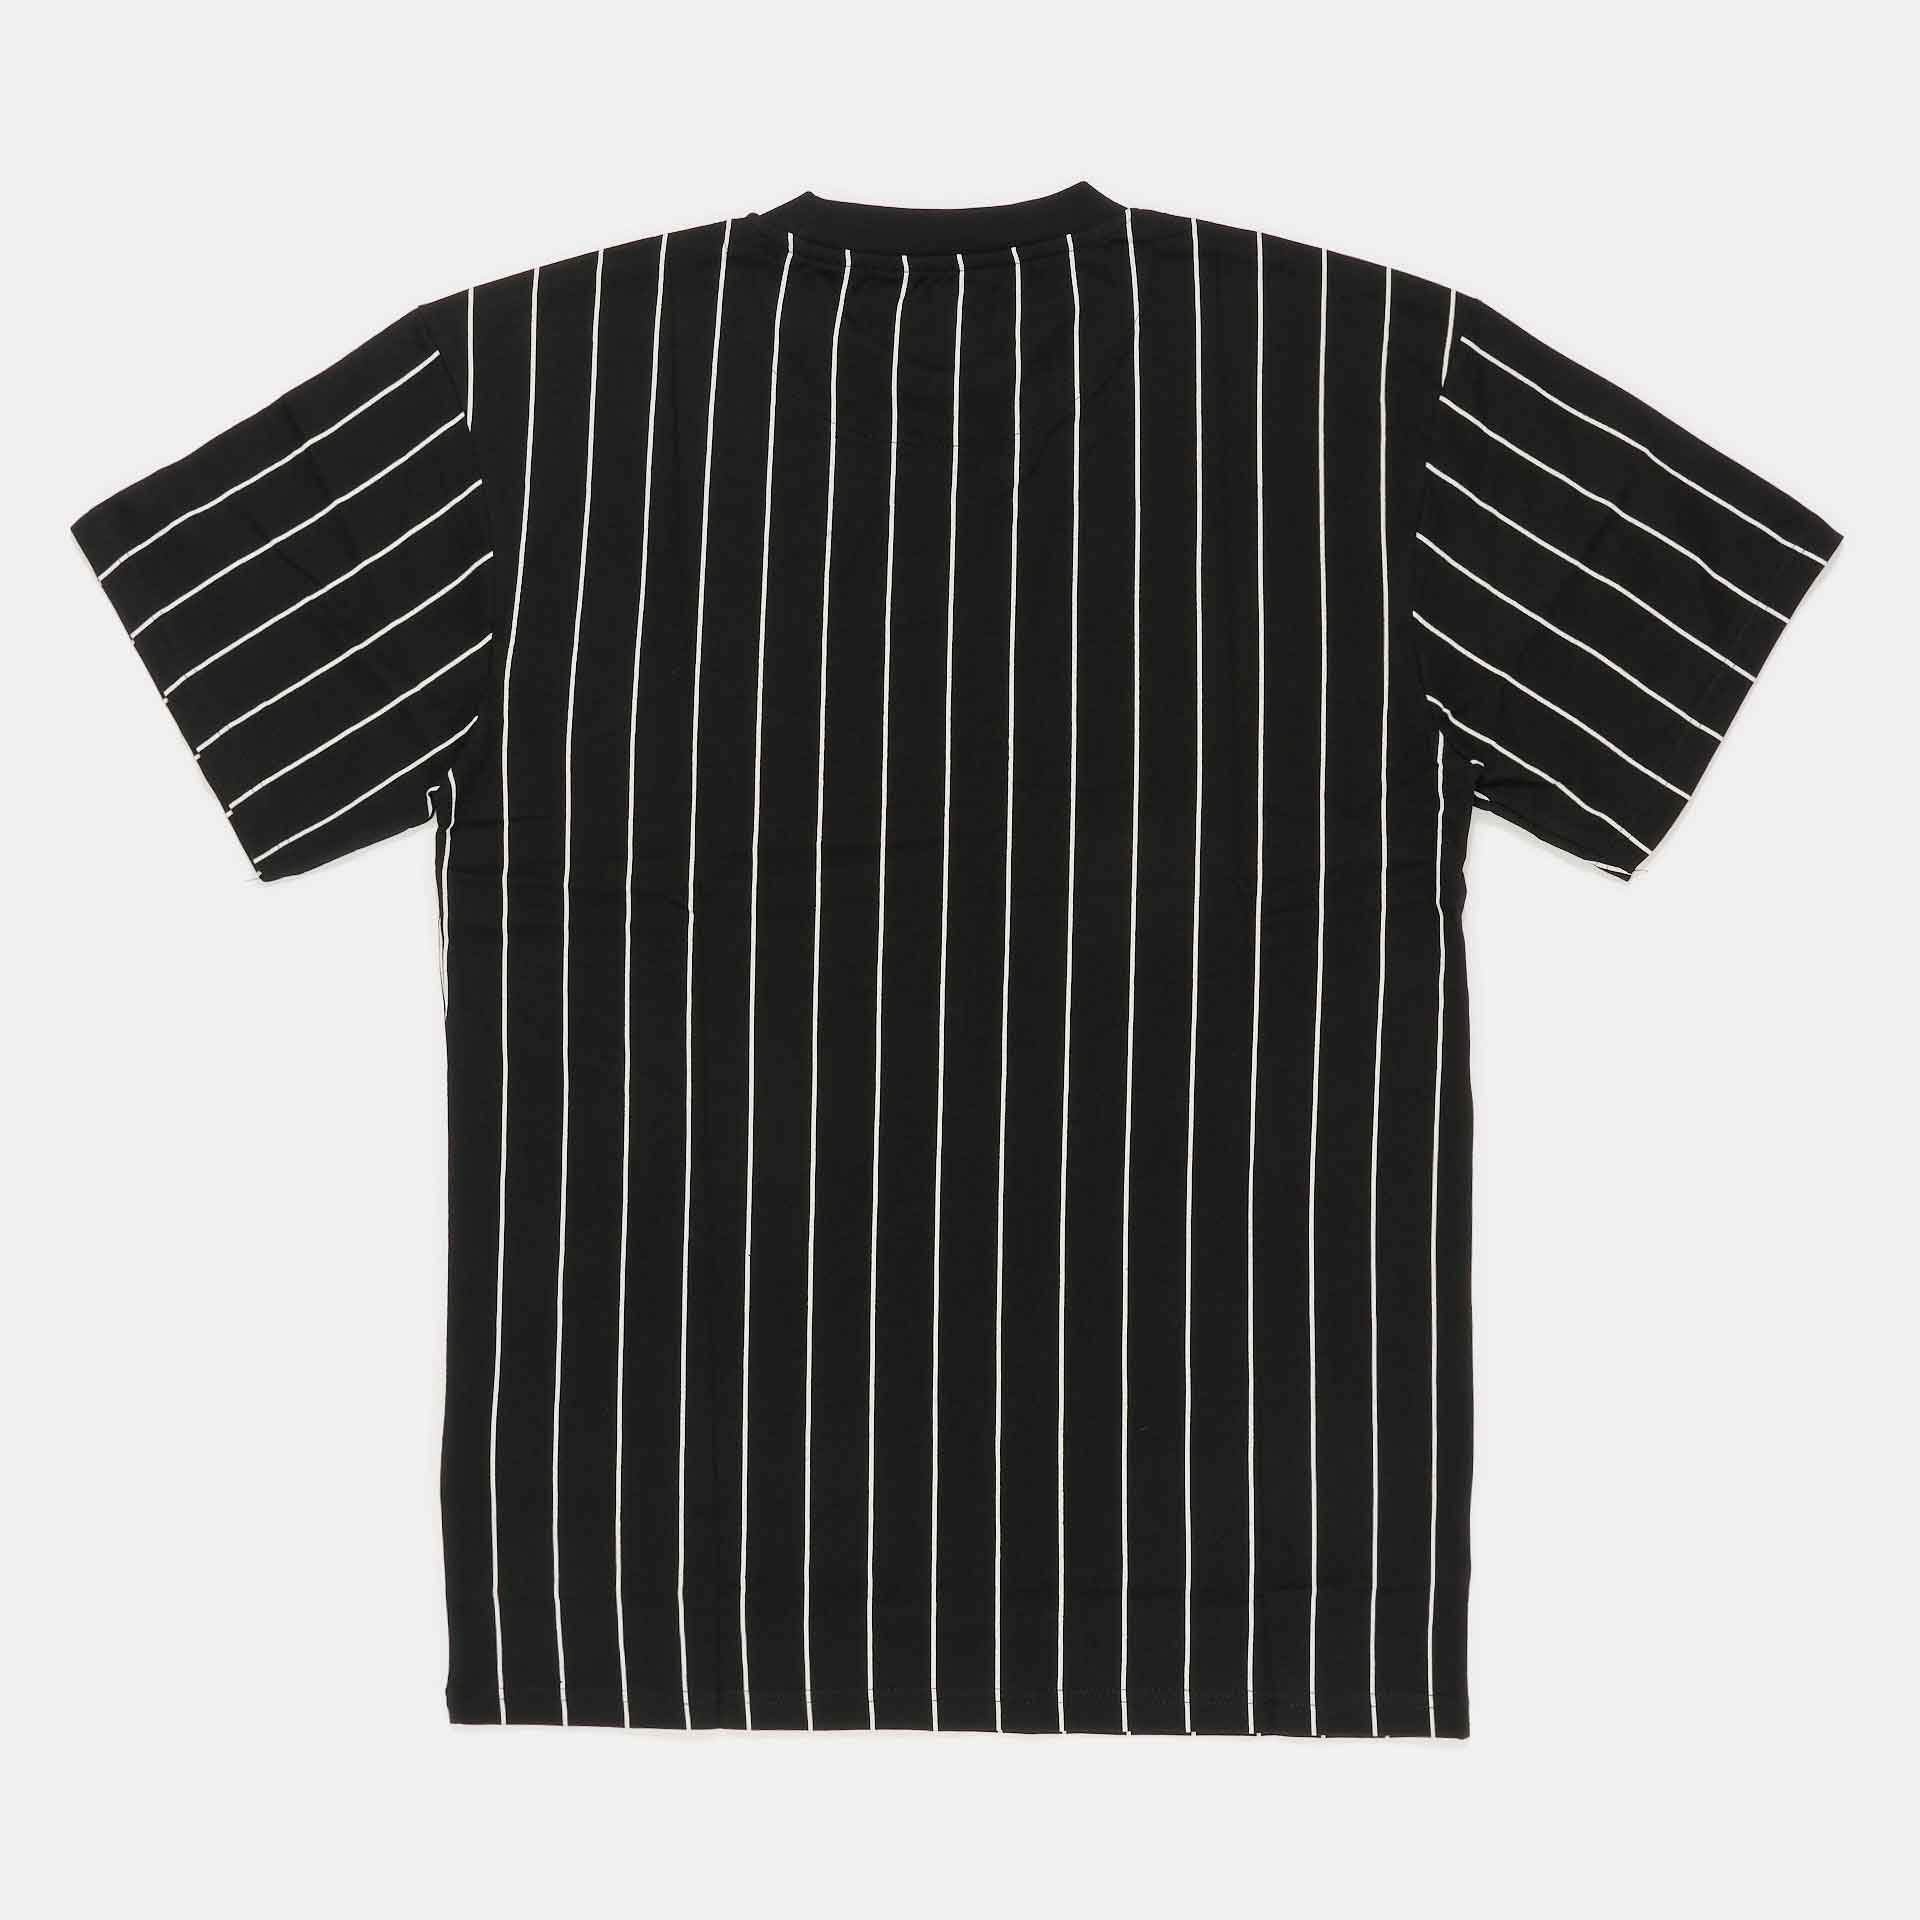 Karl Kani Small Signature Pinstripe T-Shirt Black/White